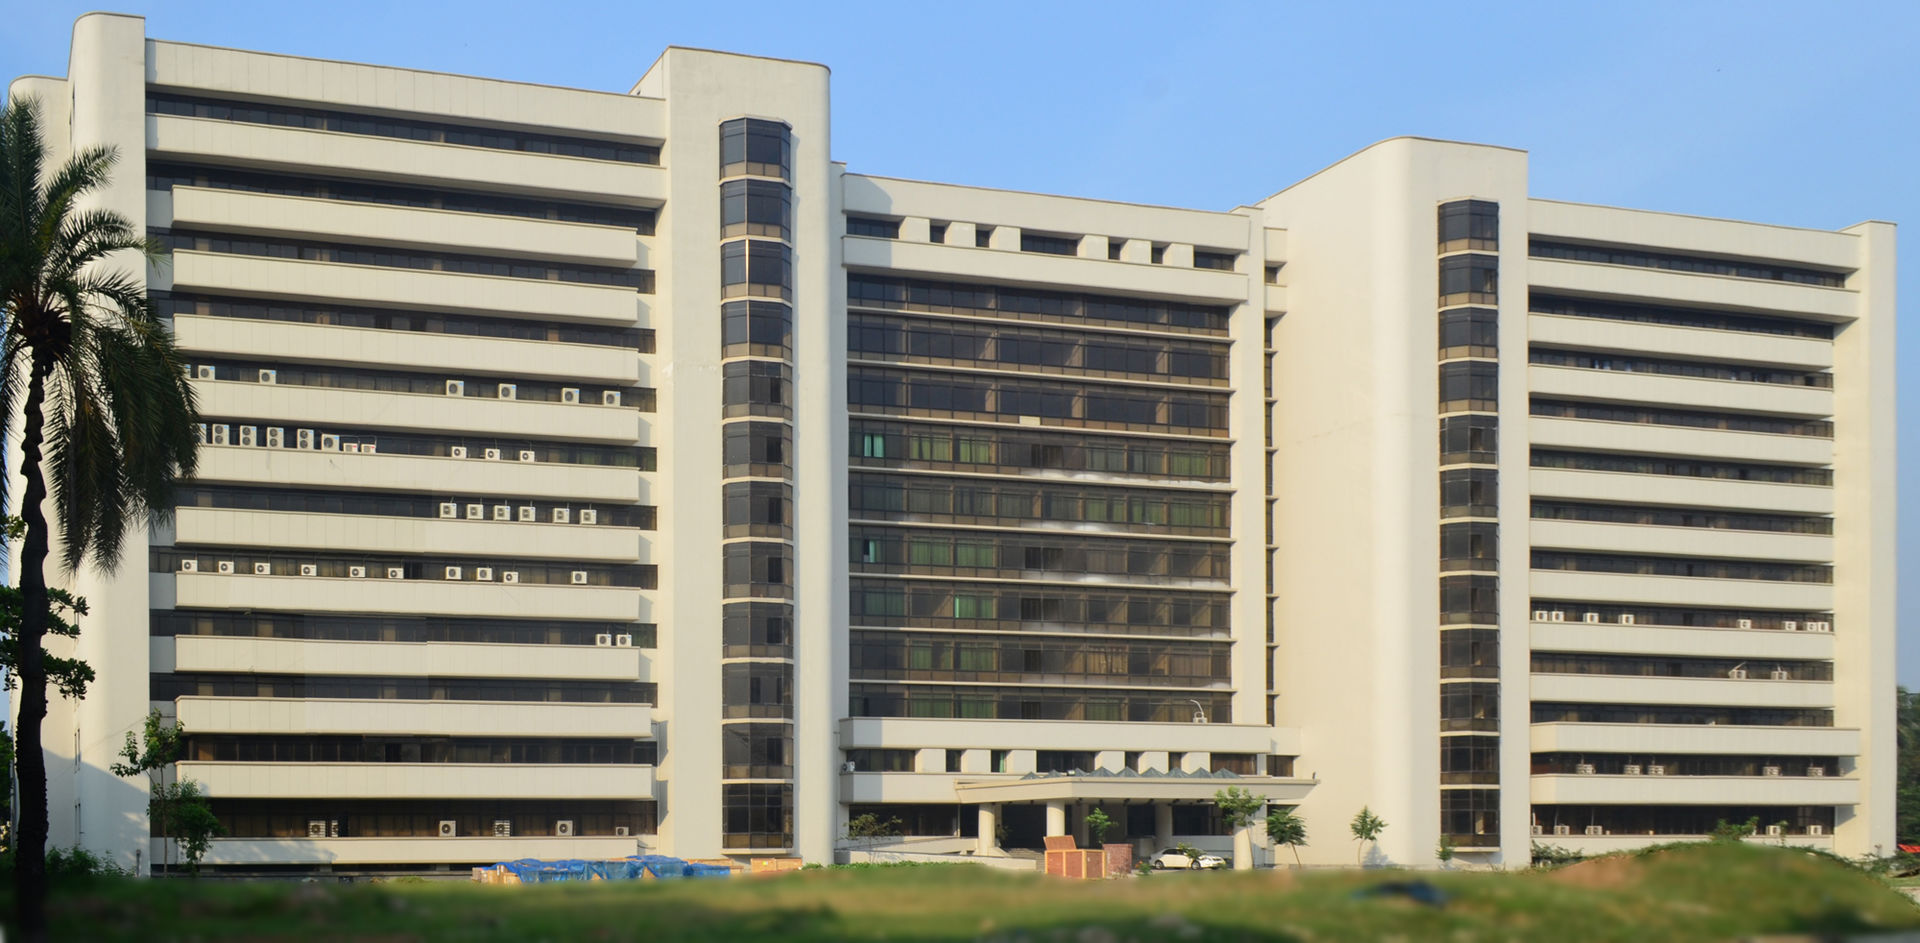 Bangladesh University of Engineering and Technology campus